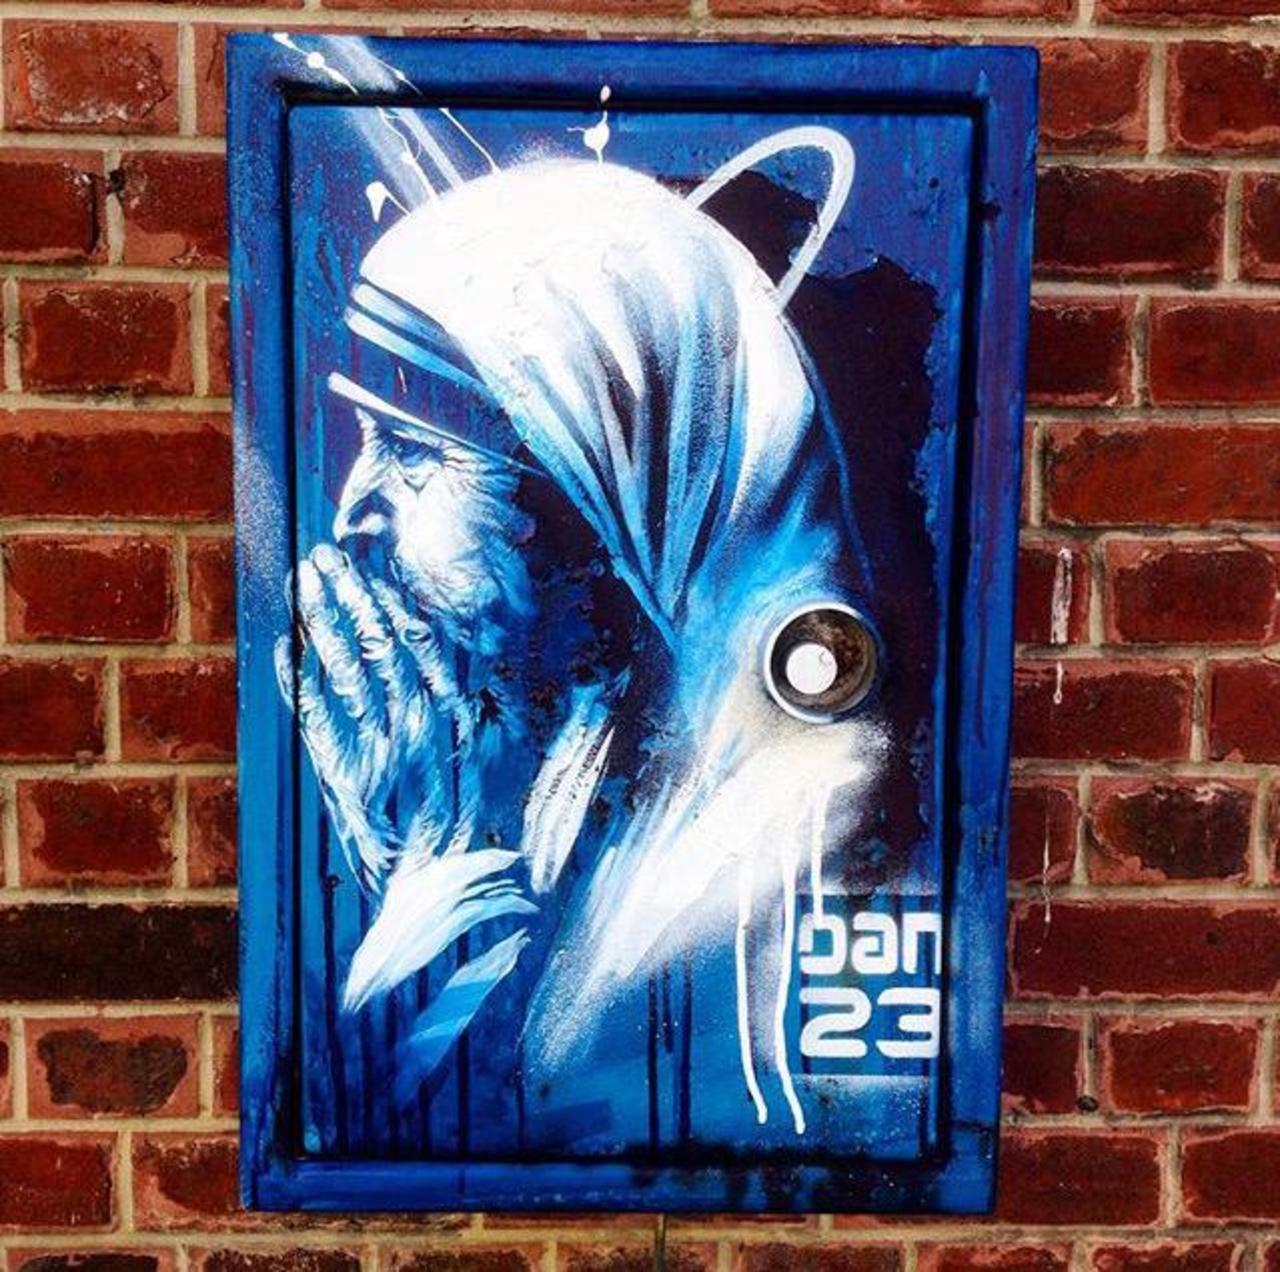 New Street Art 'Détail Spirit' by Dan23 

#art #graffiti #mural #streetart http://t.co/4hTKxKVdqa